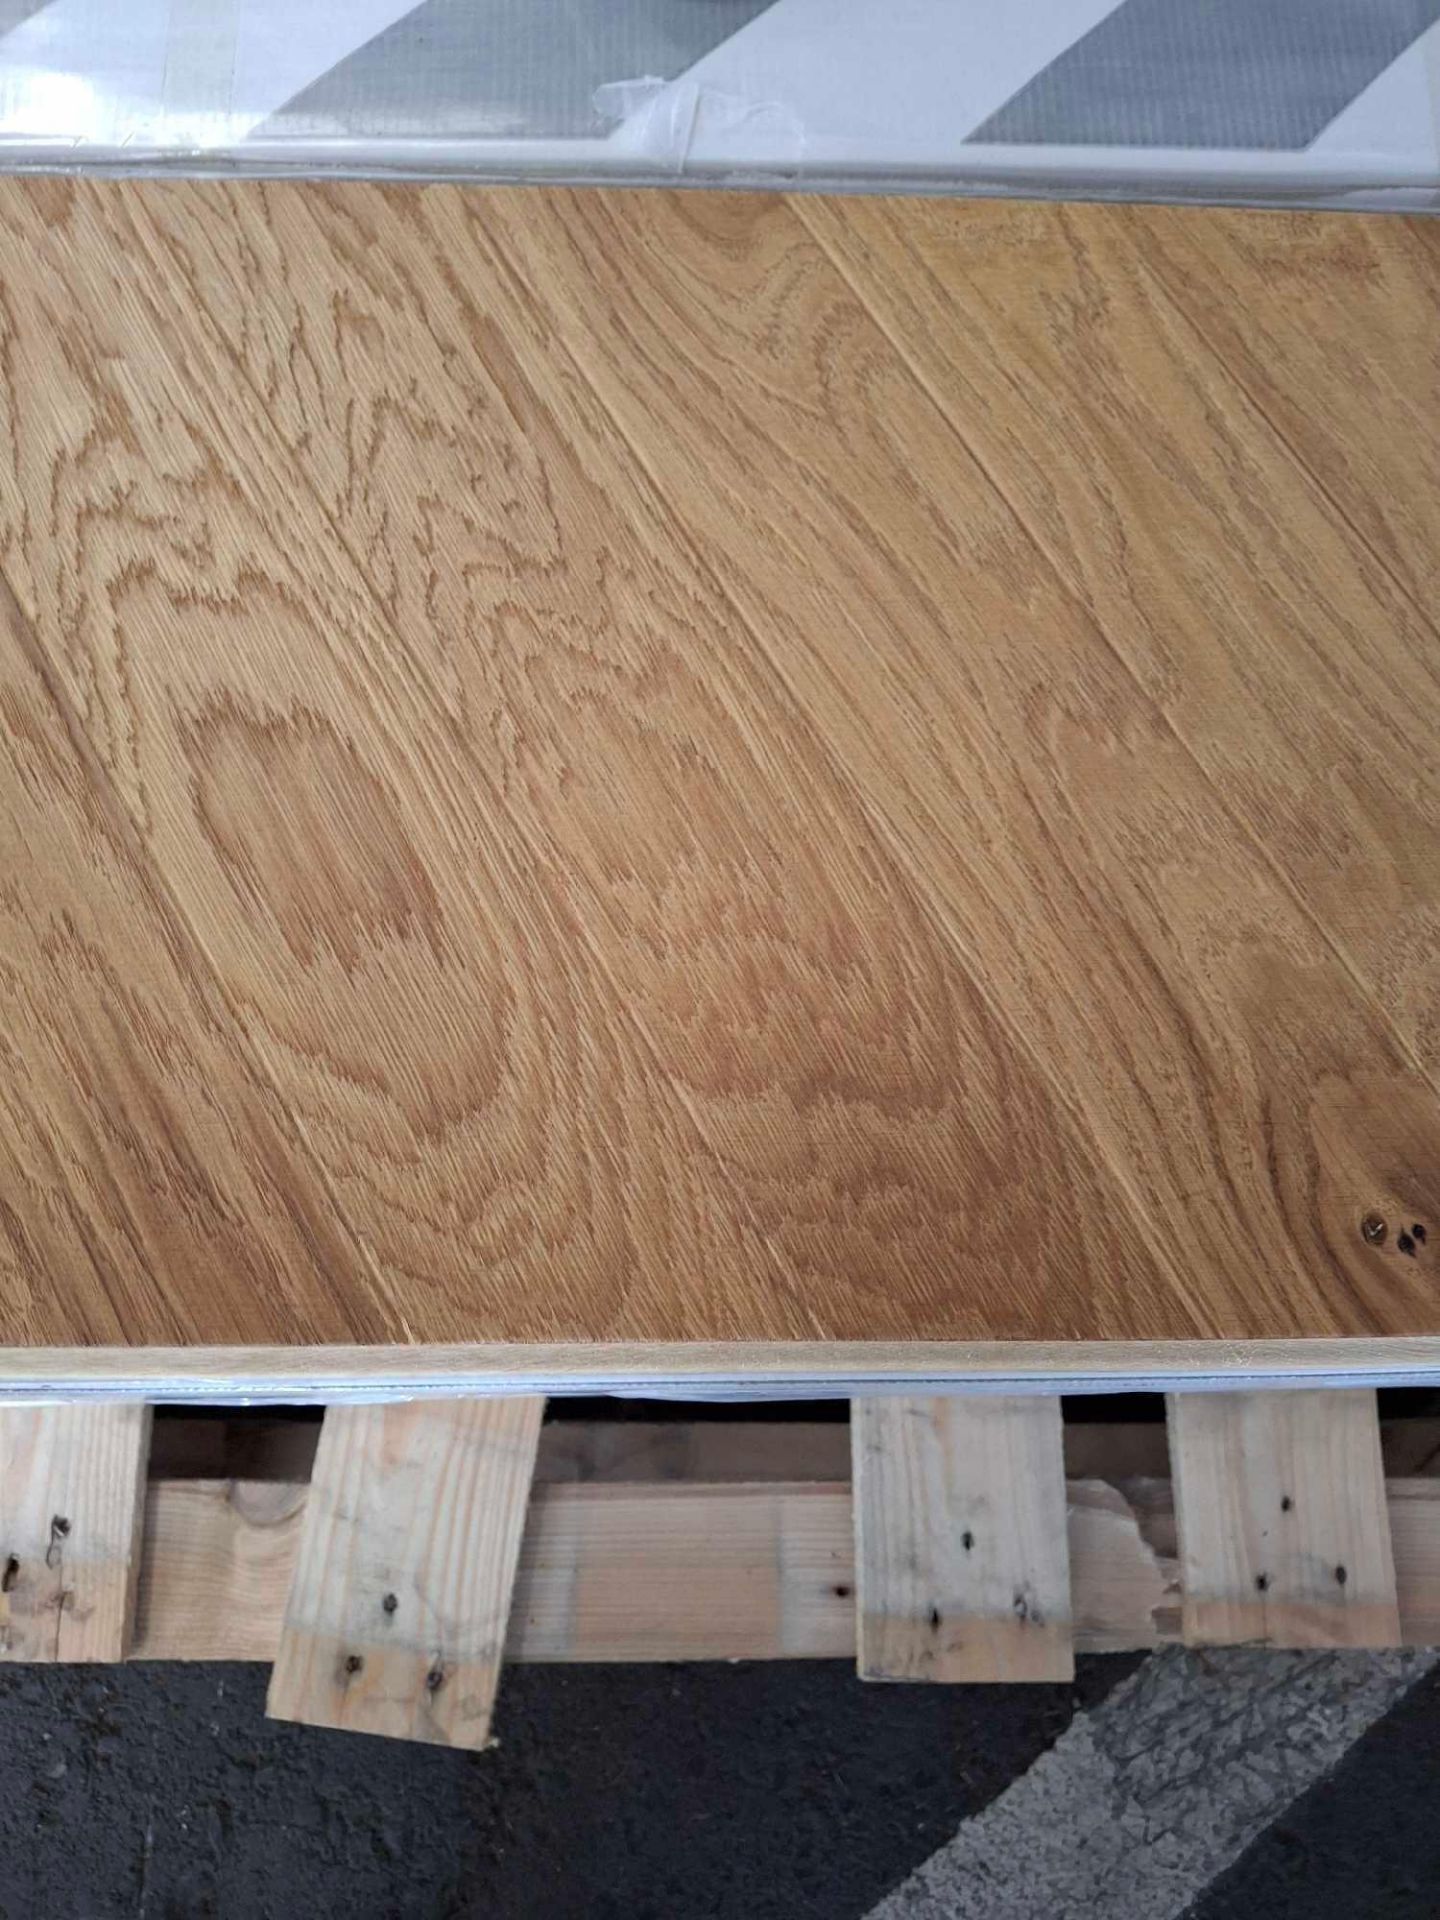 5 Packs of KÃ¤hrs Wood Flooring Chevron Light Brown Oiled 1848mm x 305mm x 15mm Per Plank 4 Per Pack - Image 4 of 5